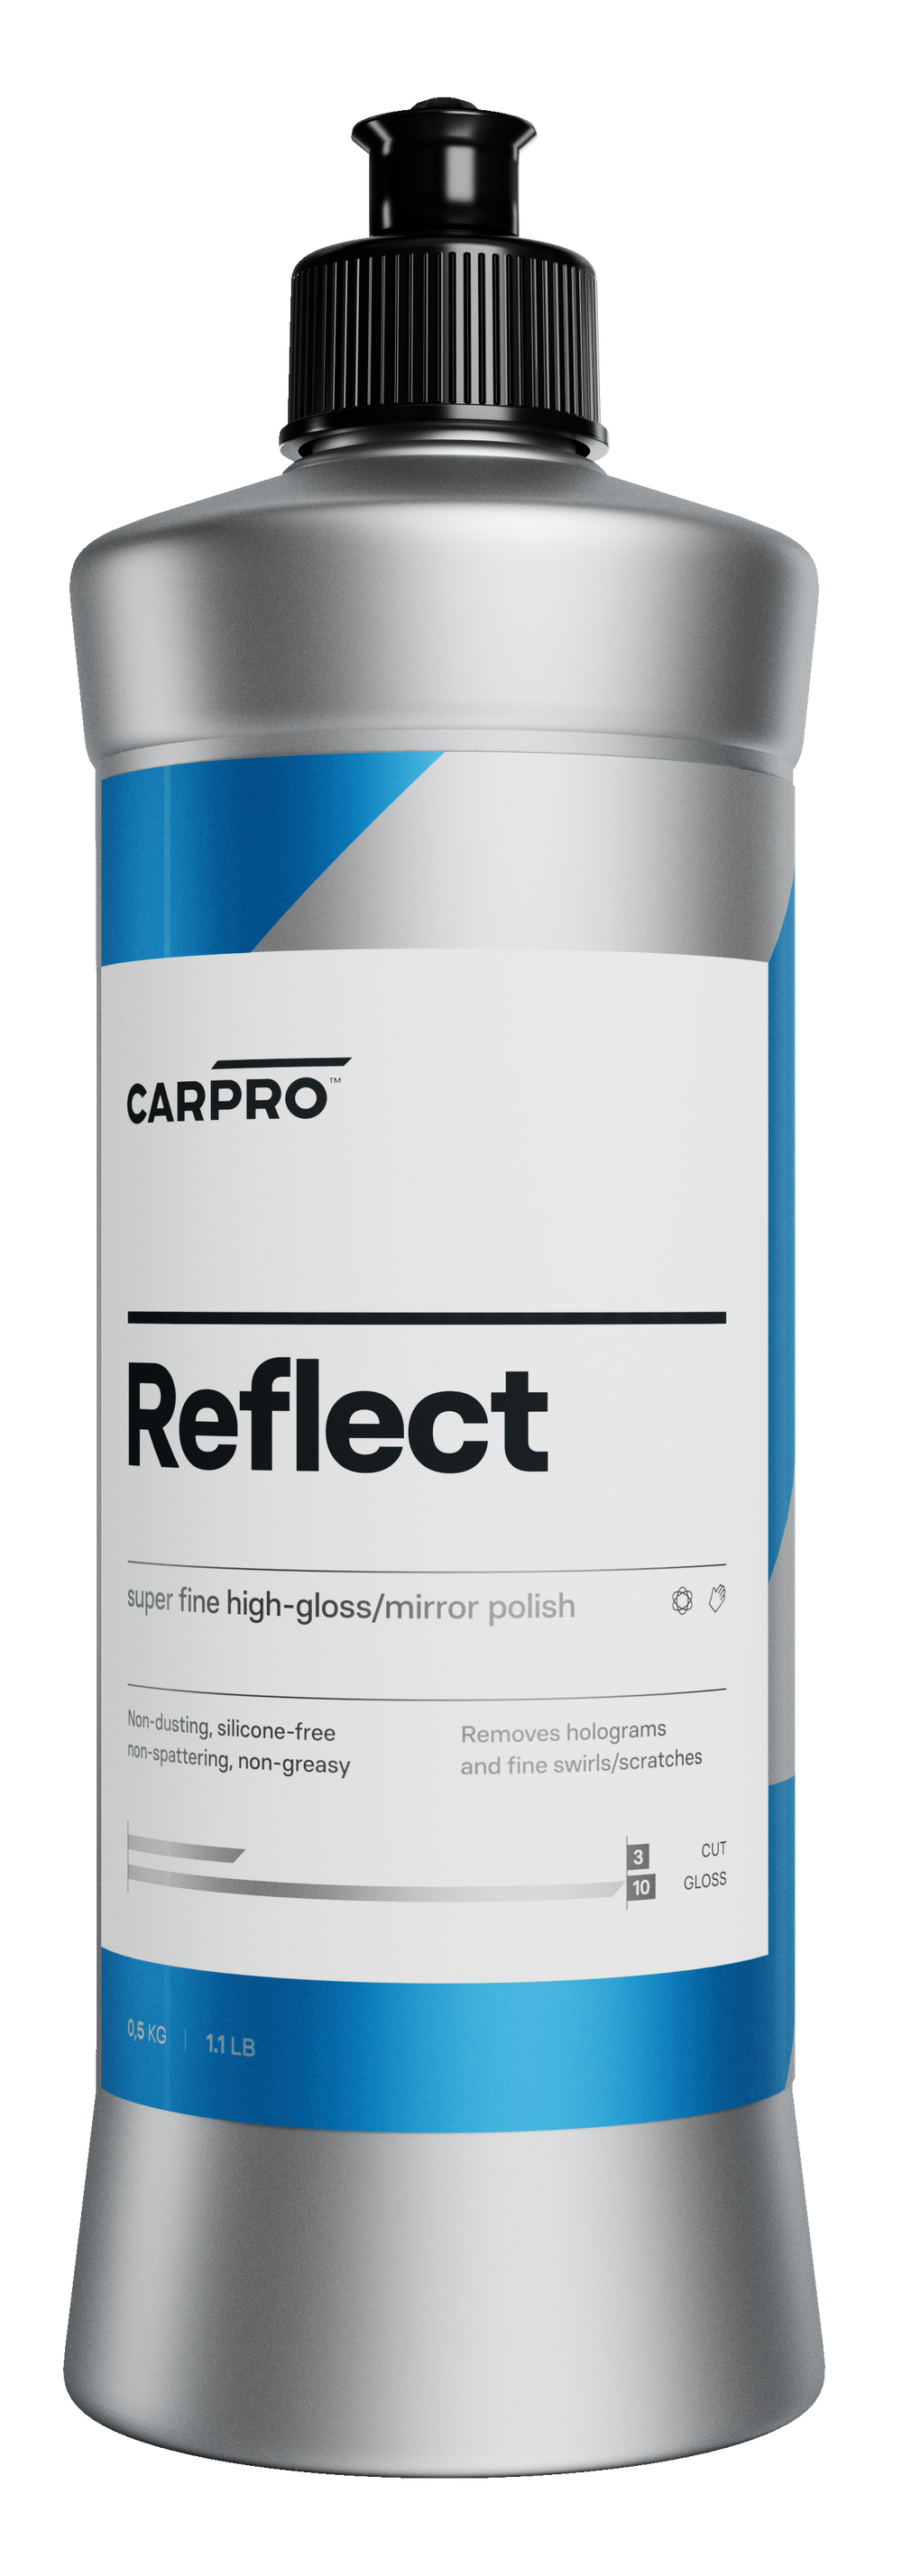 CARPRO - Reflect (Finishing polish)